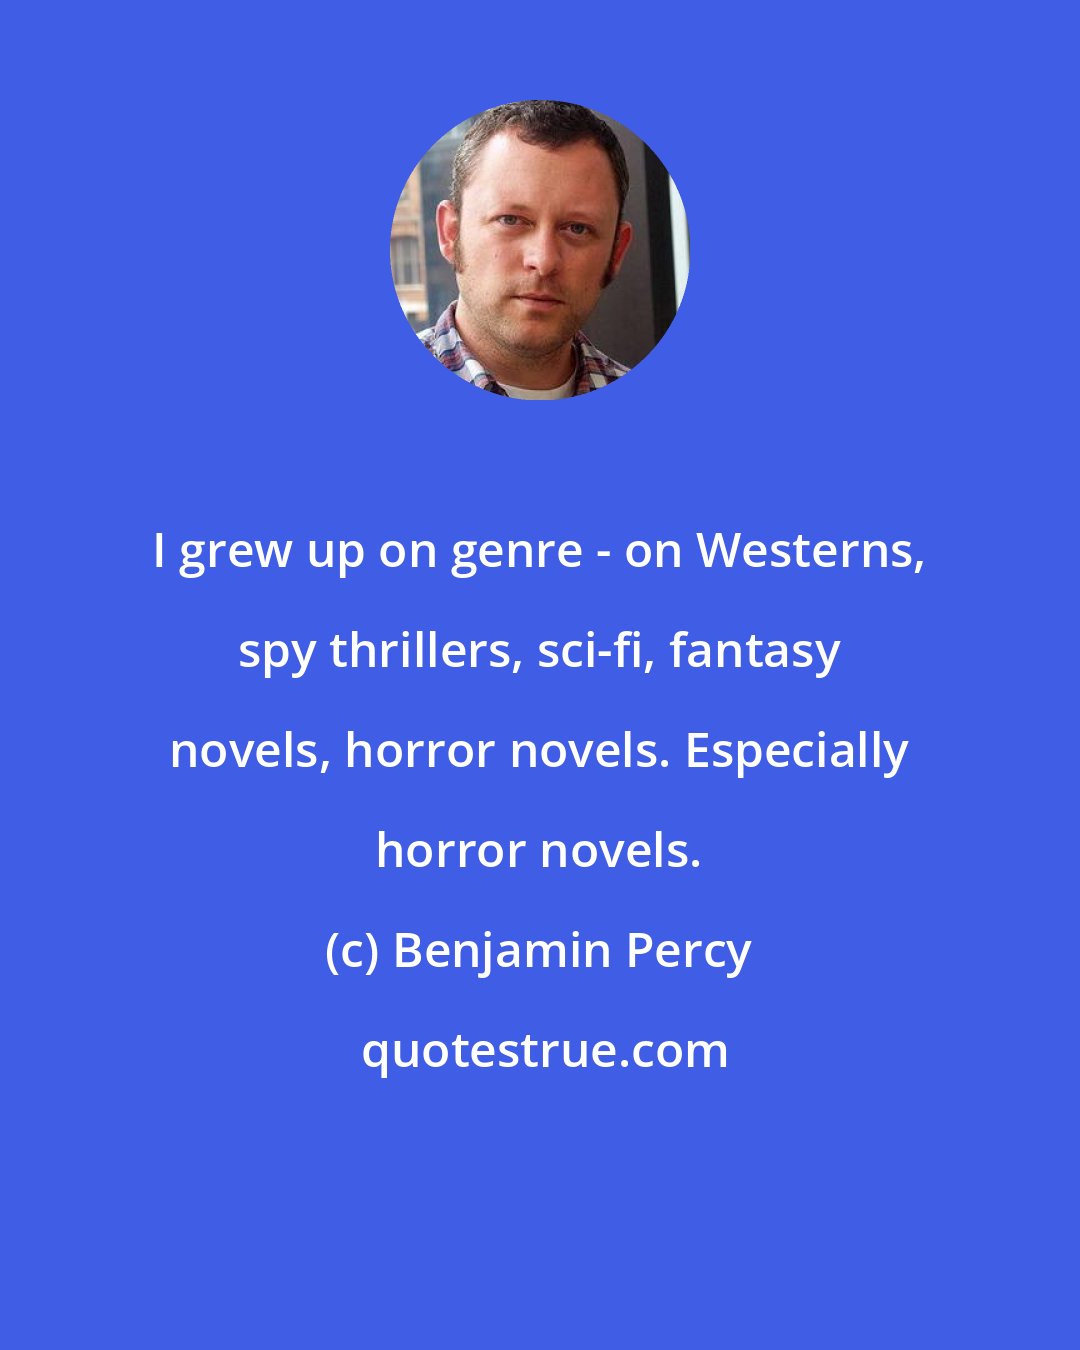 Benjamin Percy: I grew up on genre - on Westerns, spy thrillers, sci-fi, fantasy novels, horror novels. Especially horror novels.